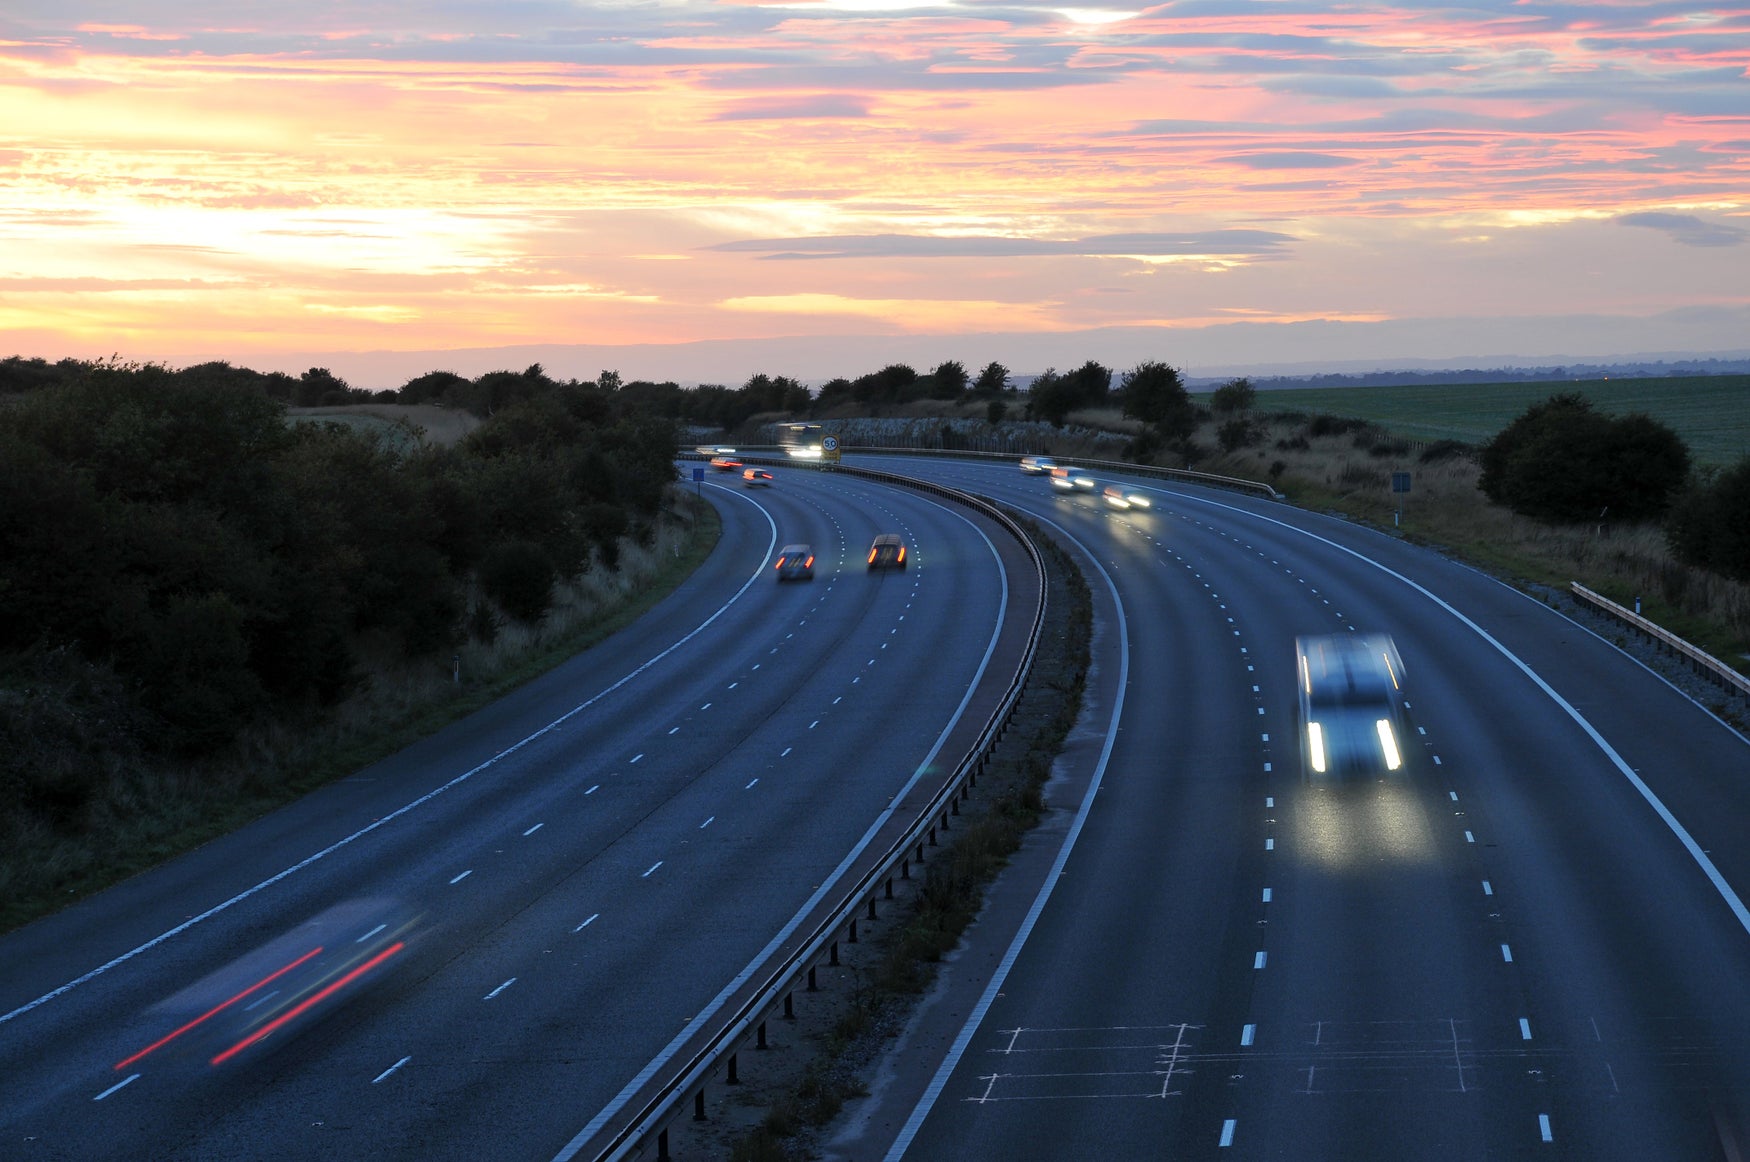 Curving motorway sunset